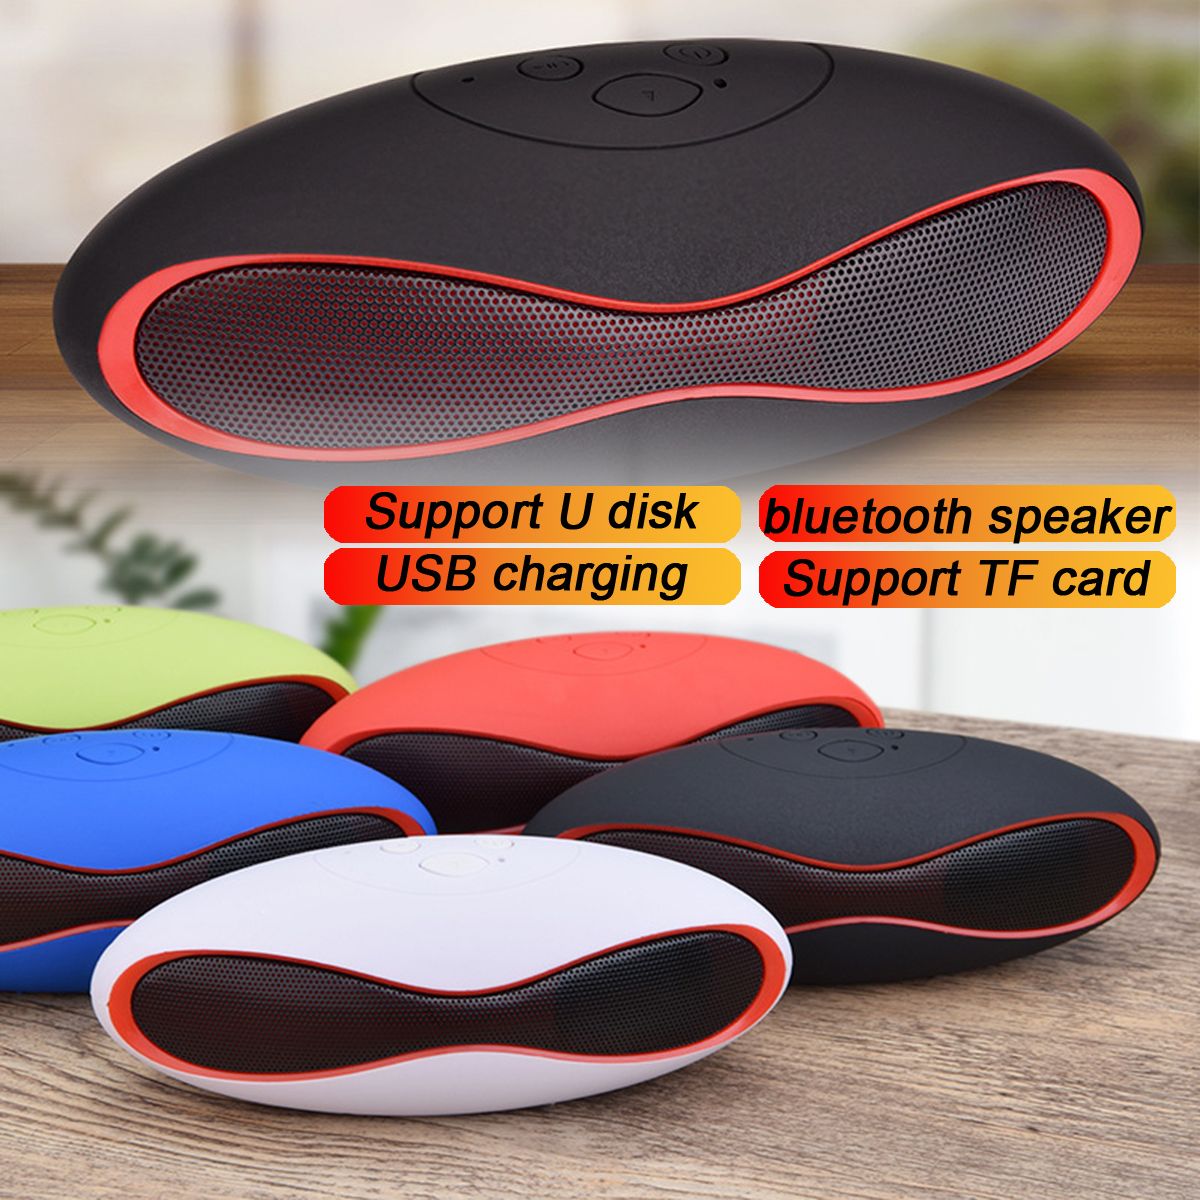 Mini-Football-Shape-Wireless-bluetooth-Speaker-Portable-Wireless-Stereo-TF-Card-AUX-USB-Speaker-1613688